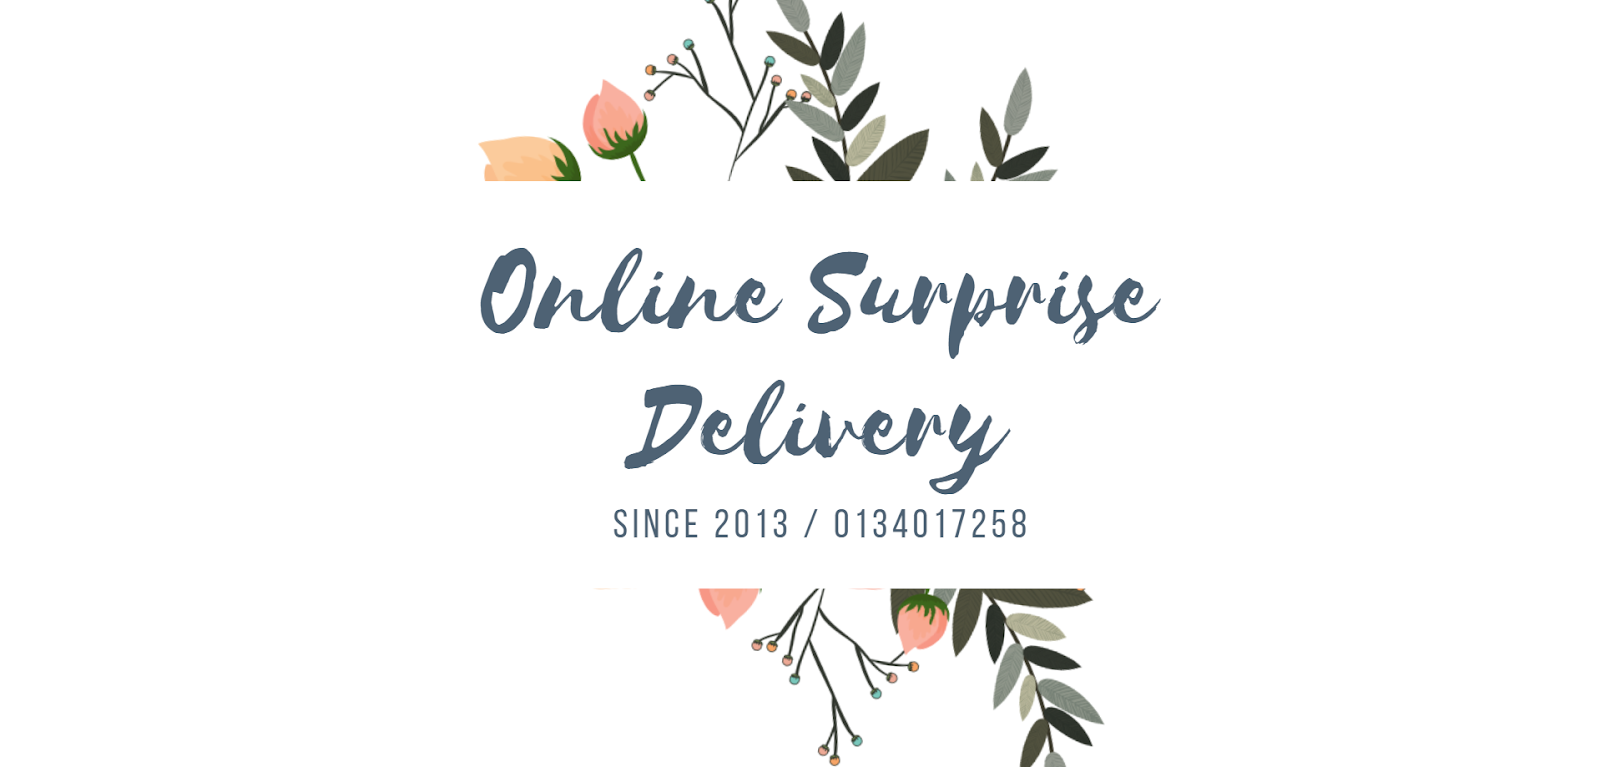 Online Surprise Delivery 